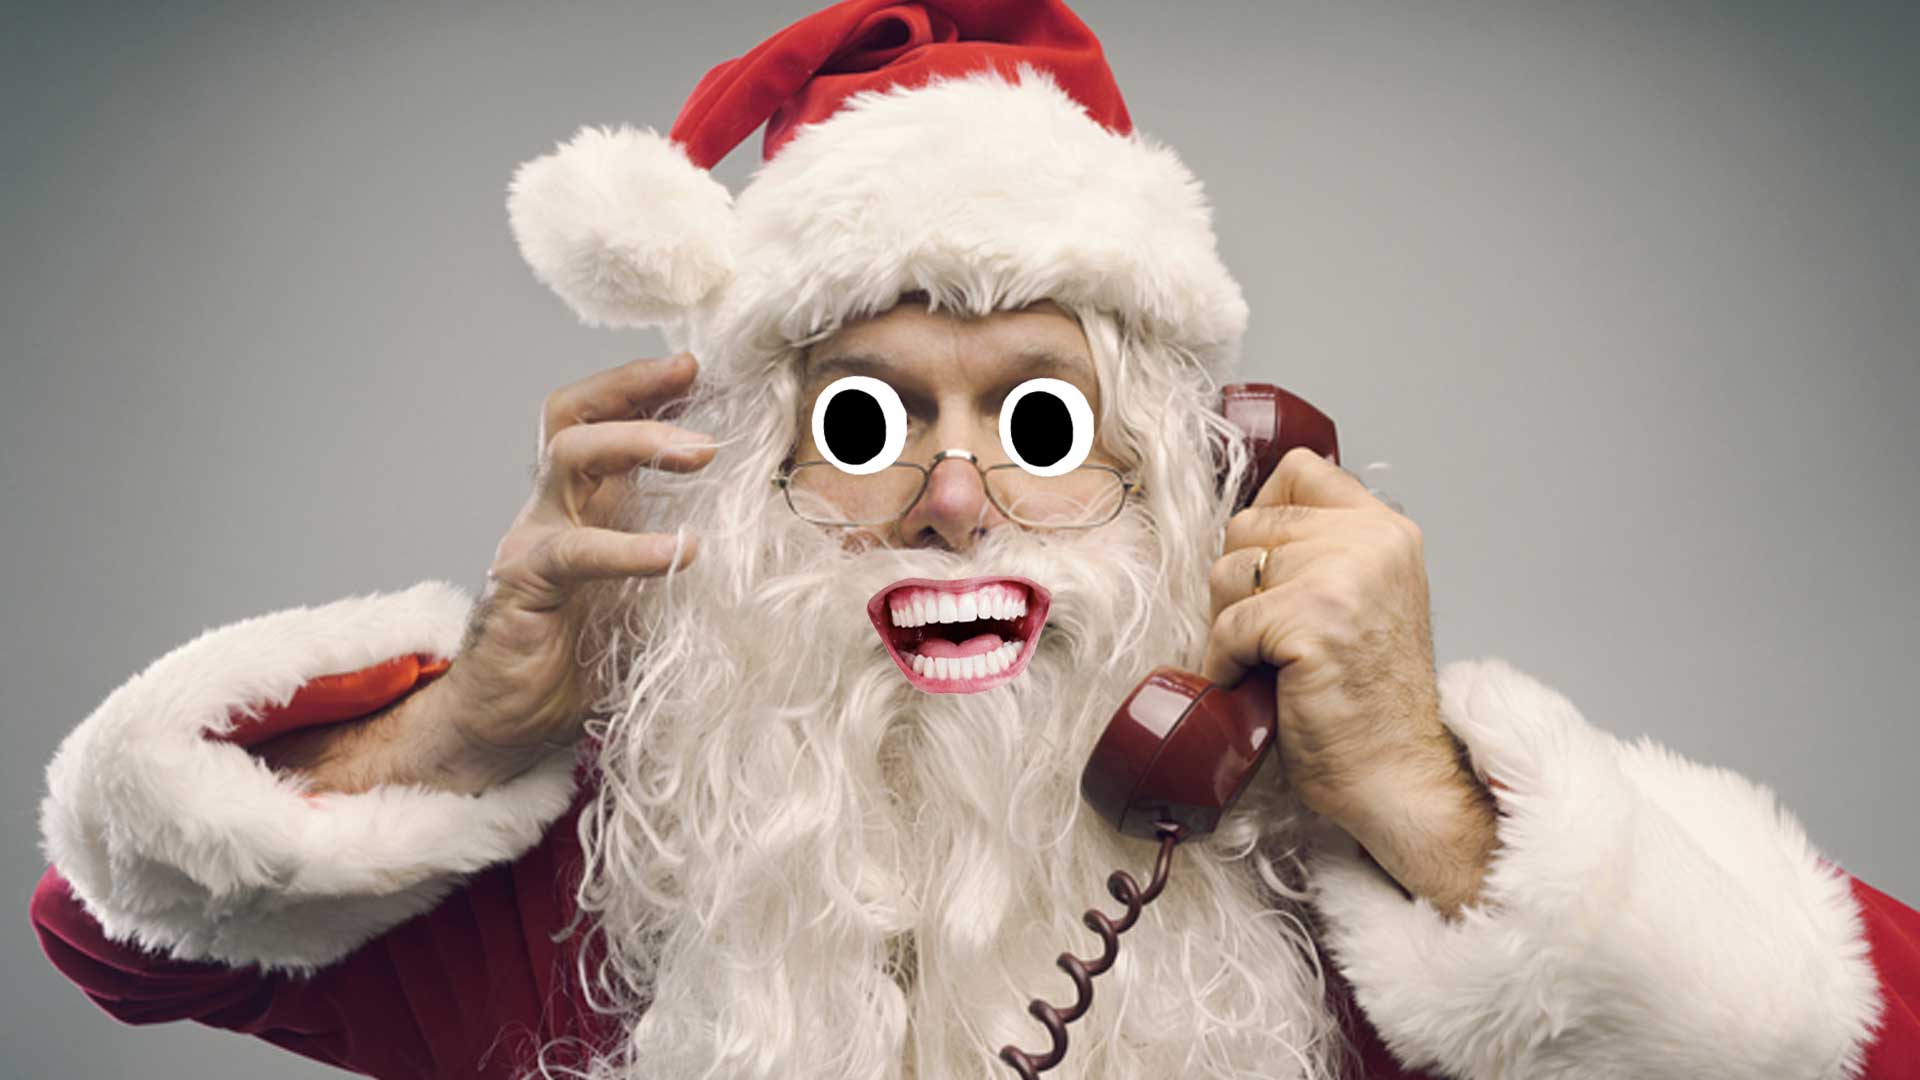 Santa Claus on the telephone